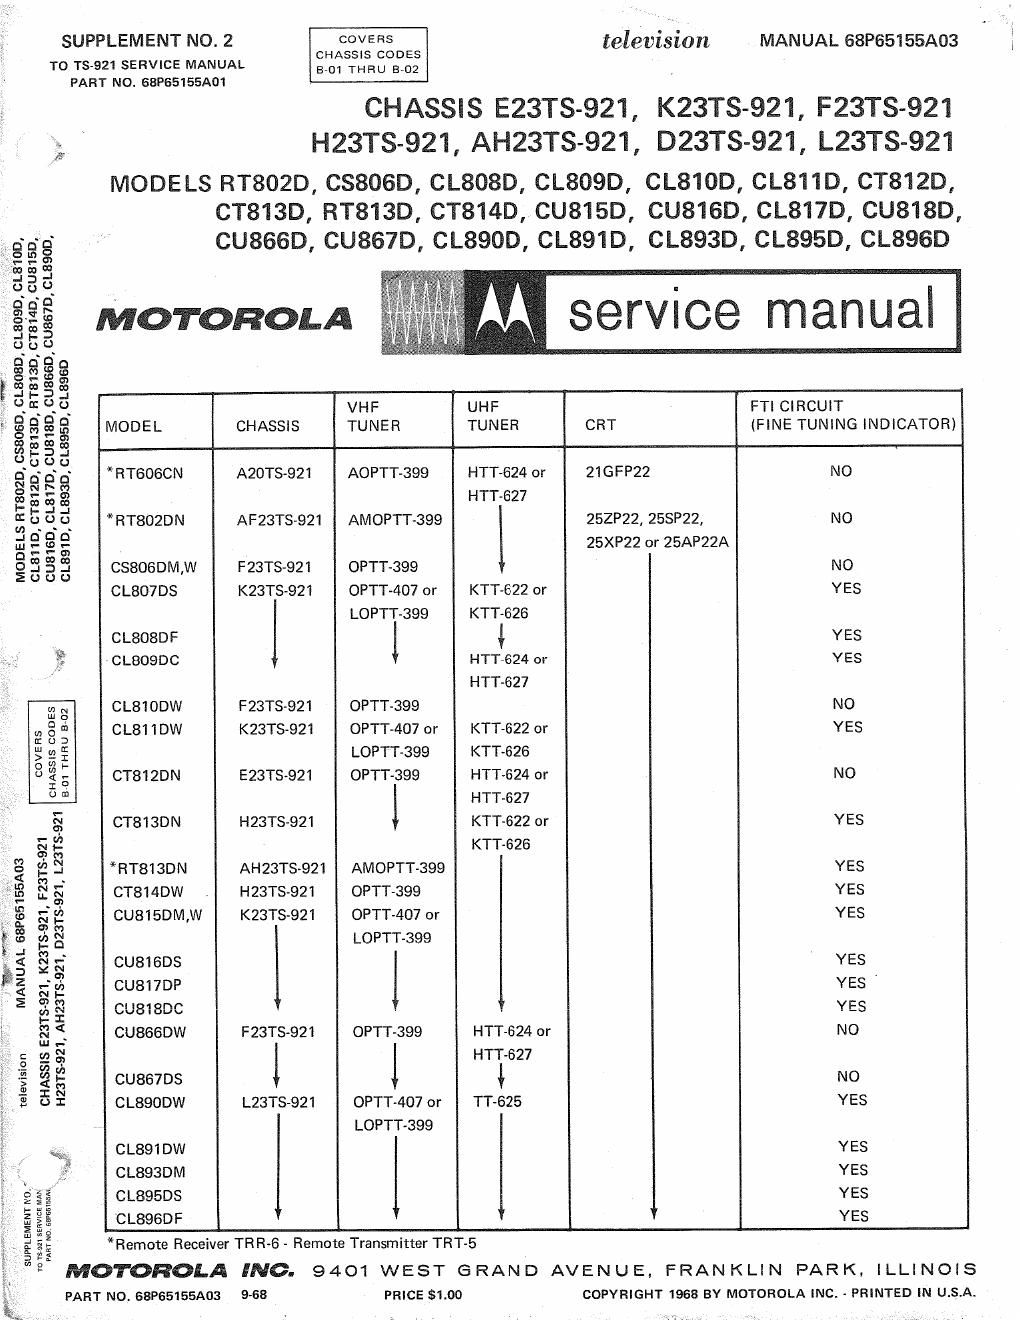 motorola cl 812 d service manual